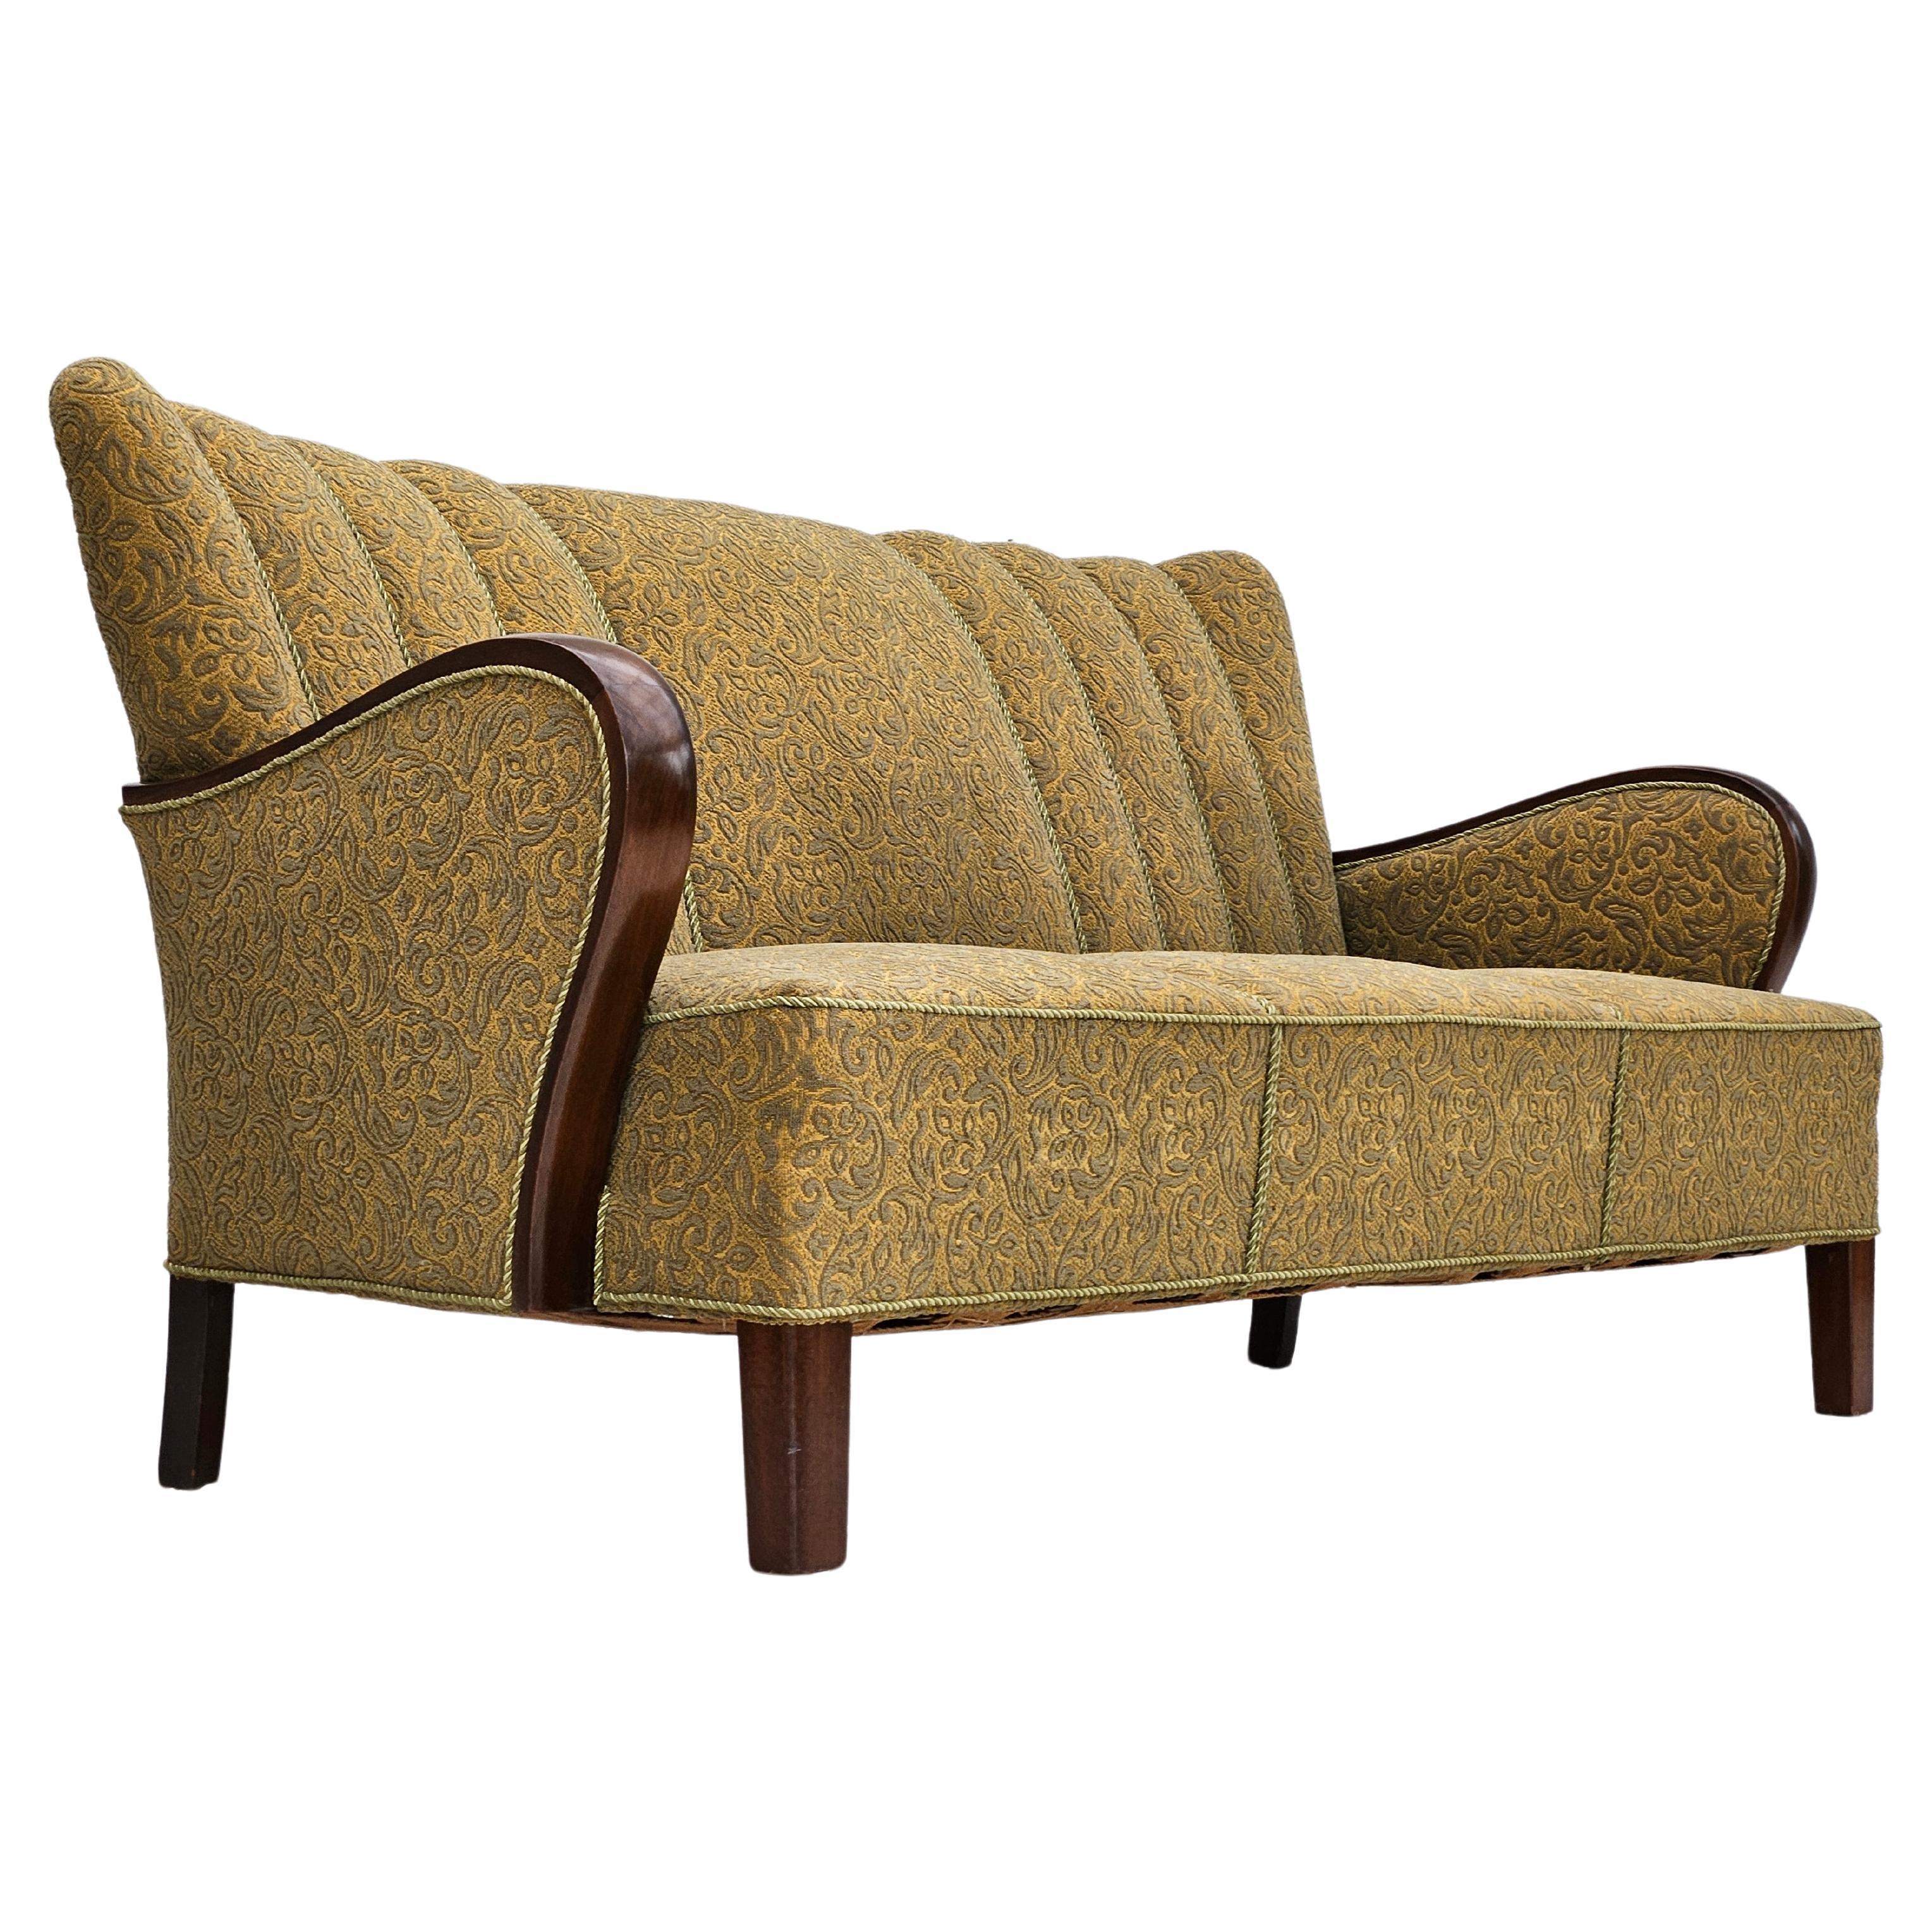 1950-60s, Danish 3-seater sofa, original condition, cotton/wool, beech wood.